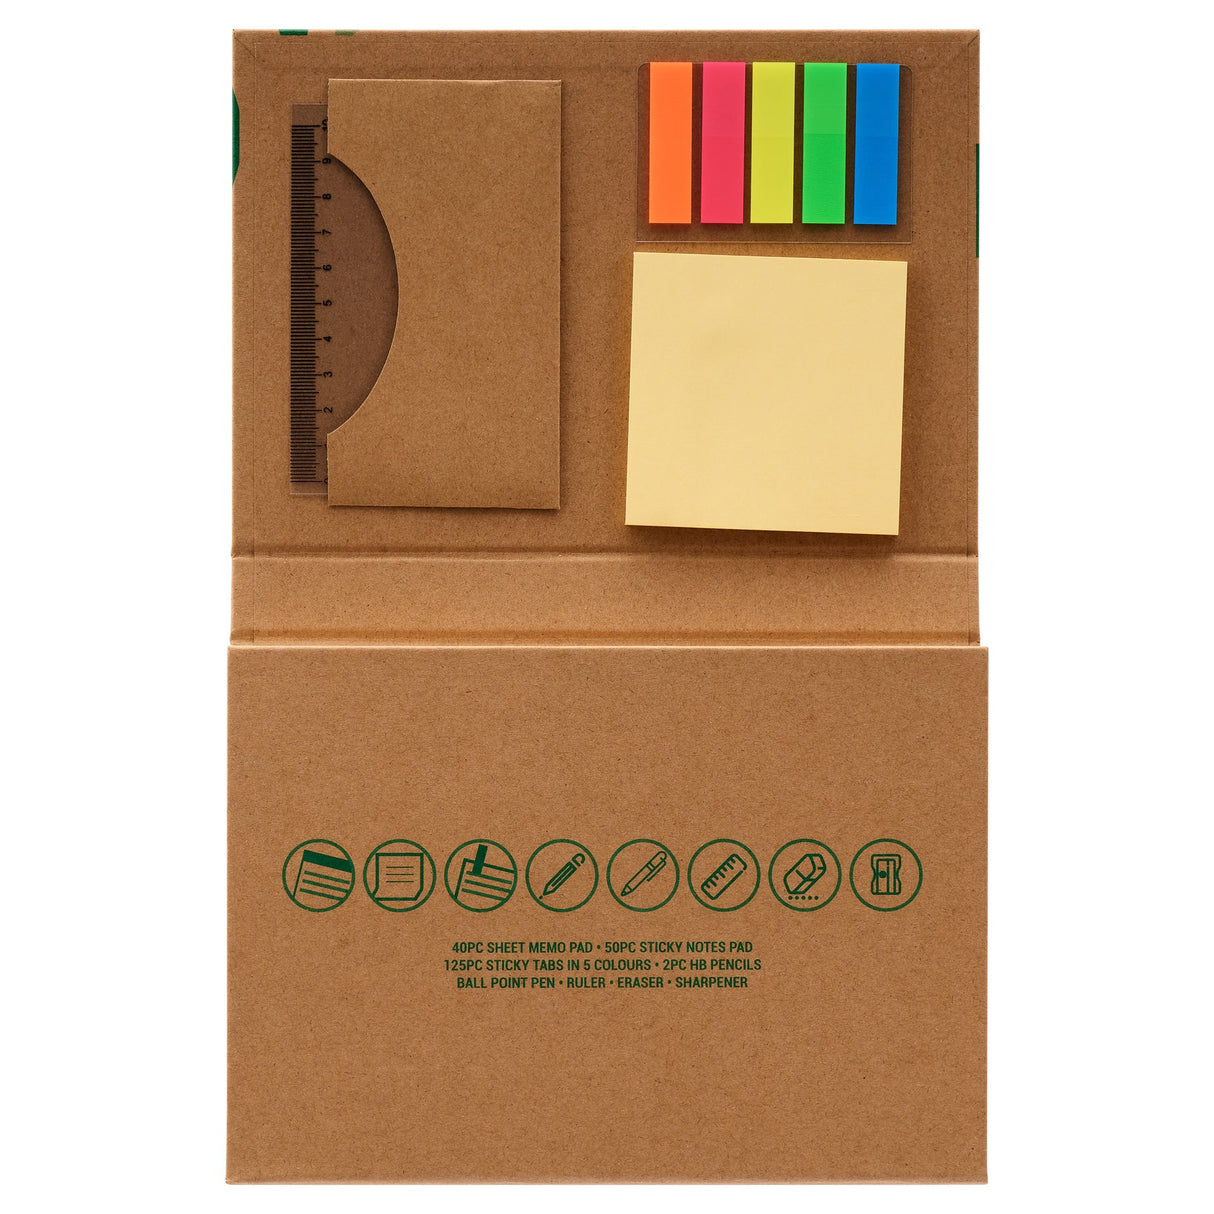 Concept Green Memo Pad Stationey Set-Stationery Sets-Concept Green|StationeryShop.co.uk